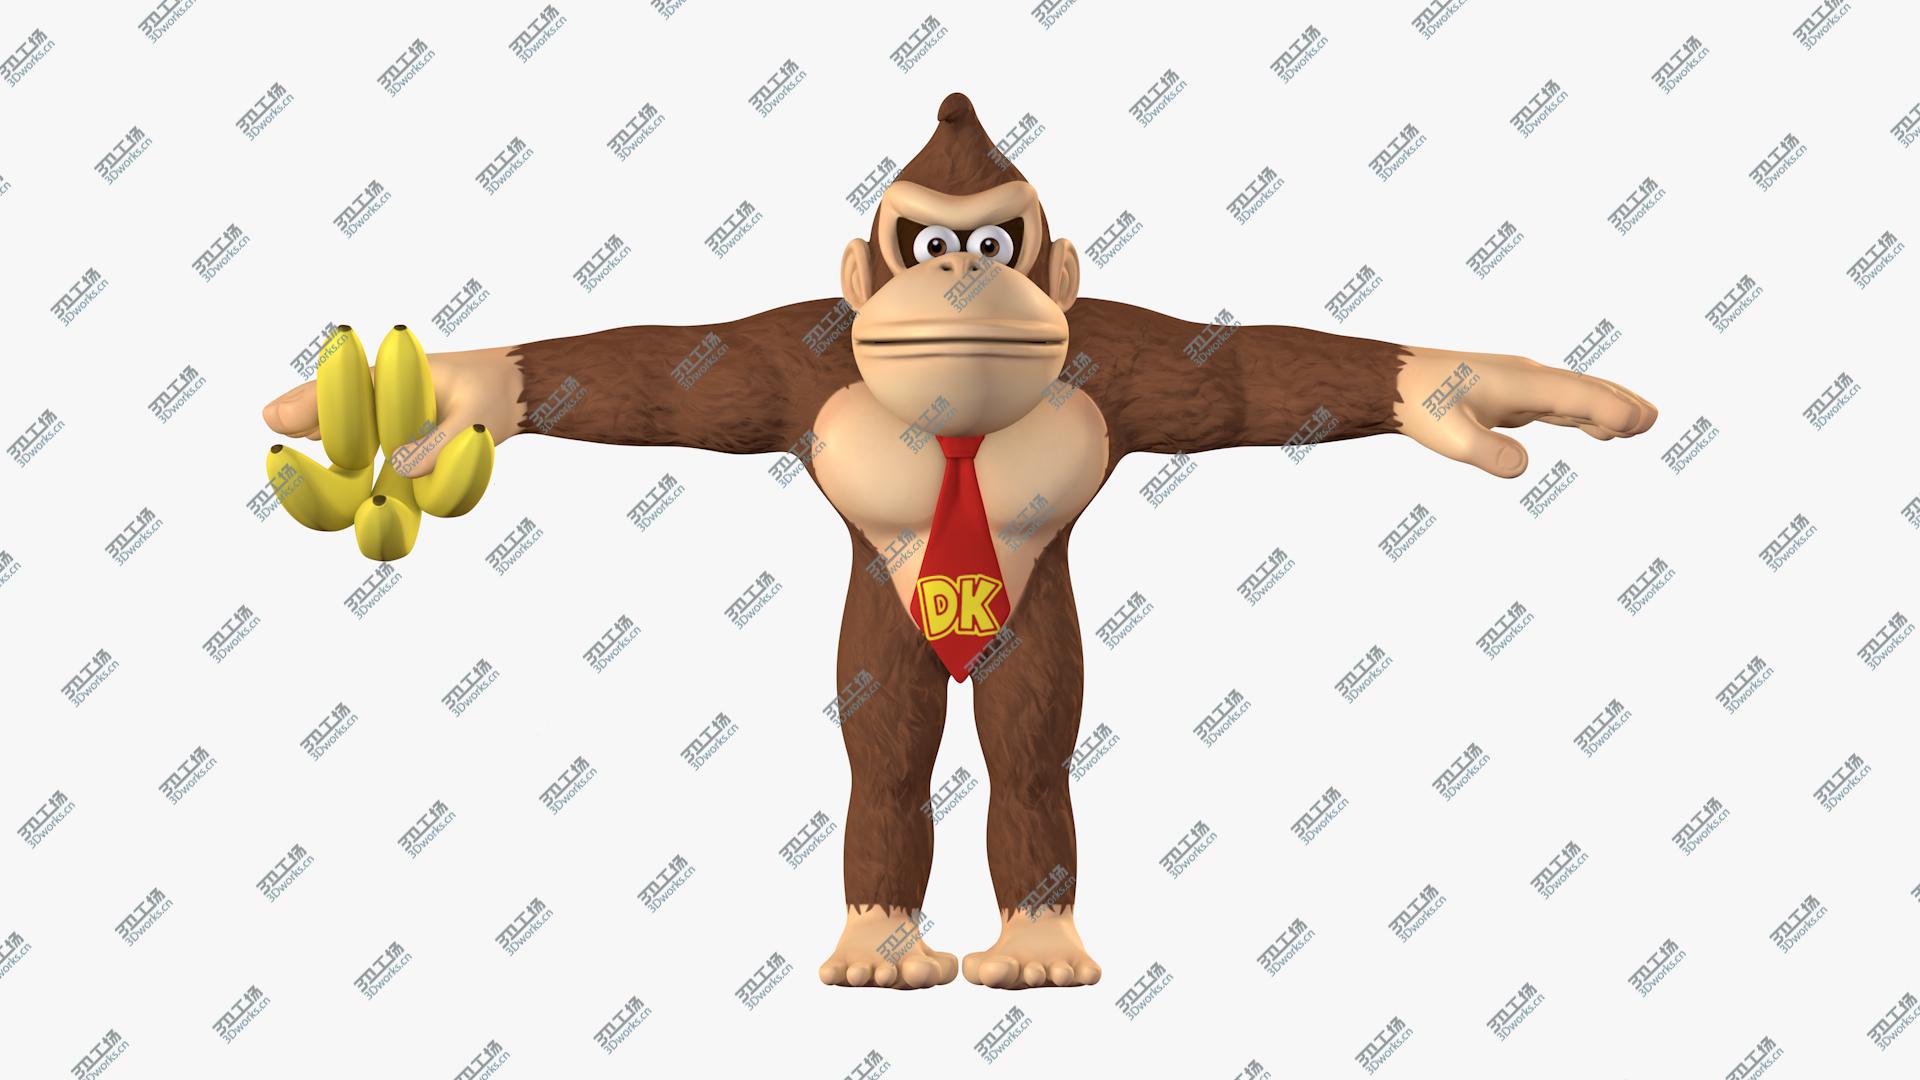 images/goods_img/202105071/3D Donkey Kong Character/3.jpg